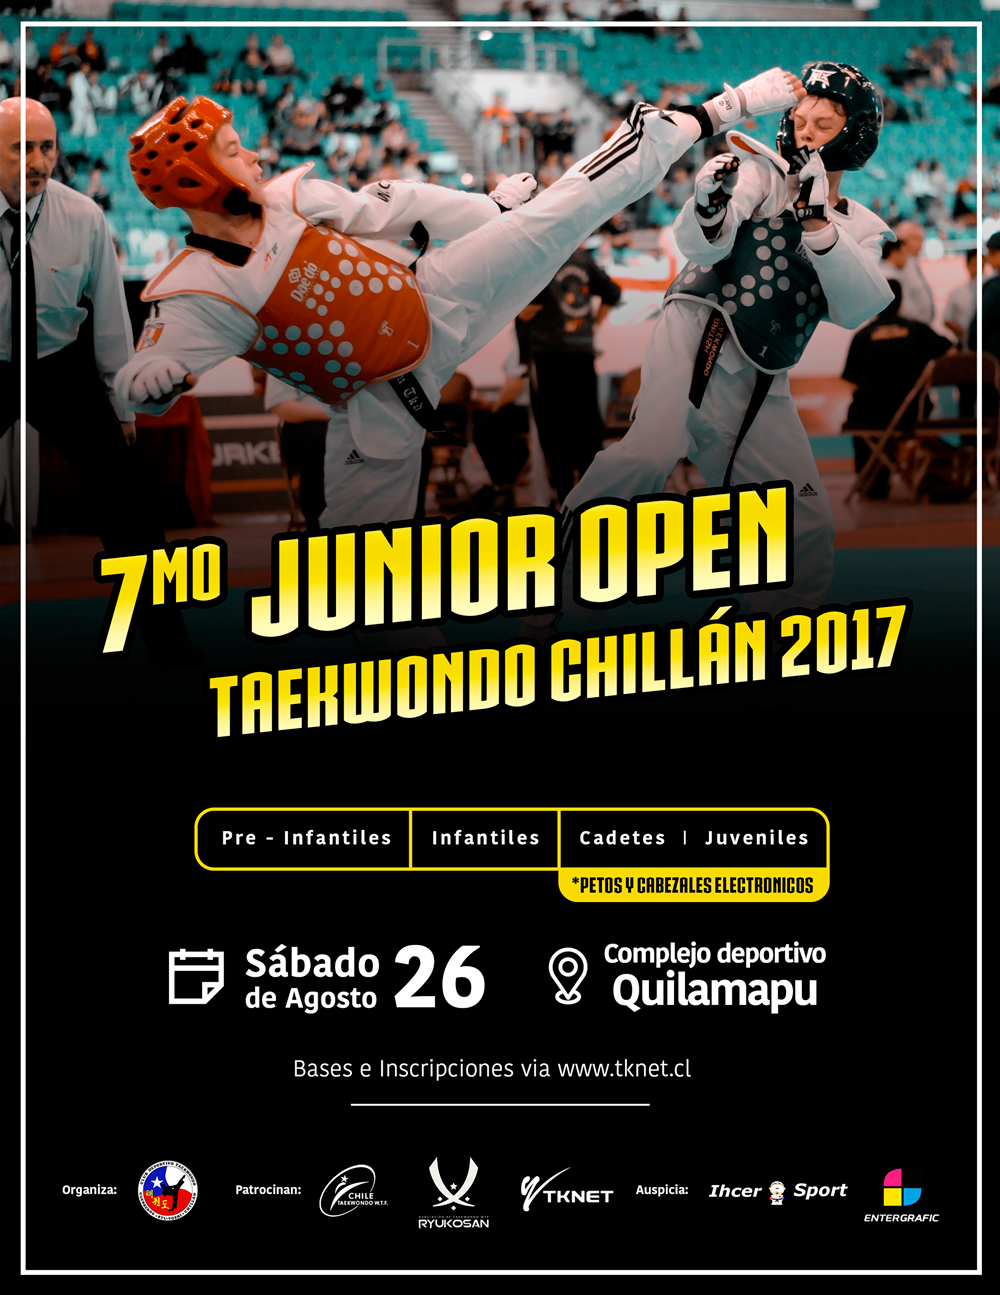 7mo Junior Open Taekwondo Chillan 2017